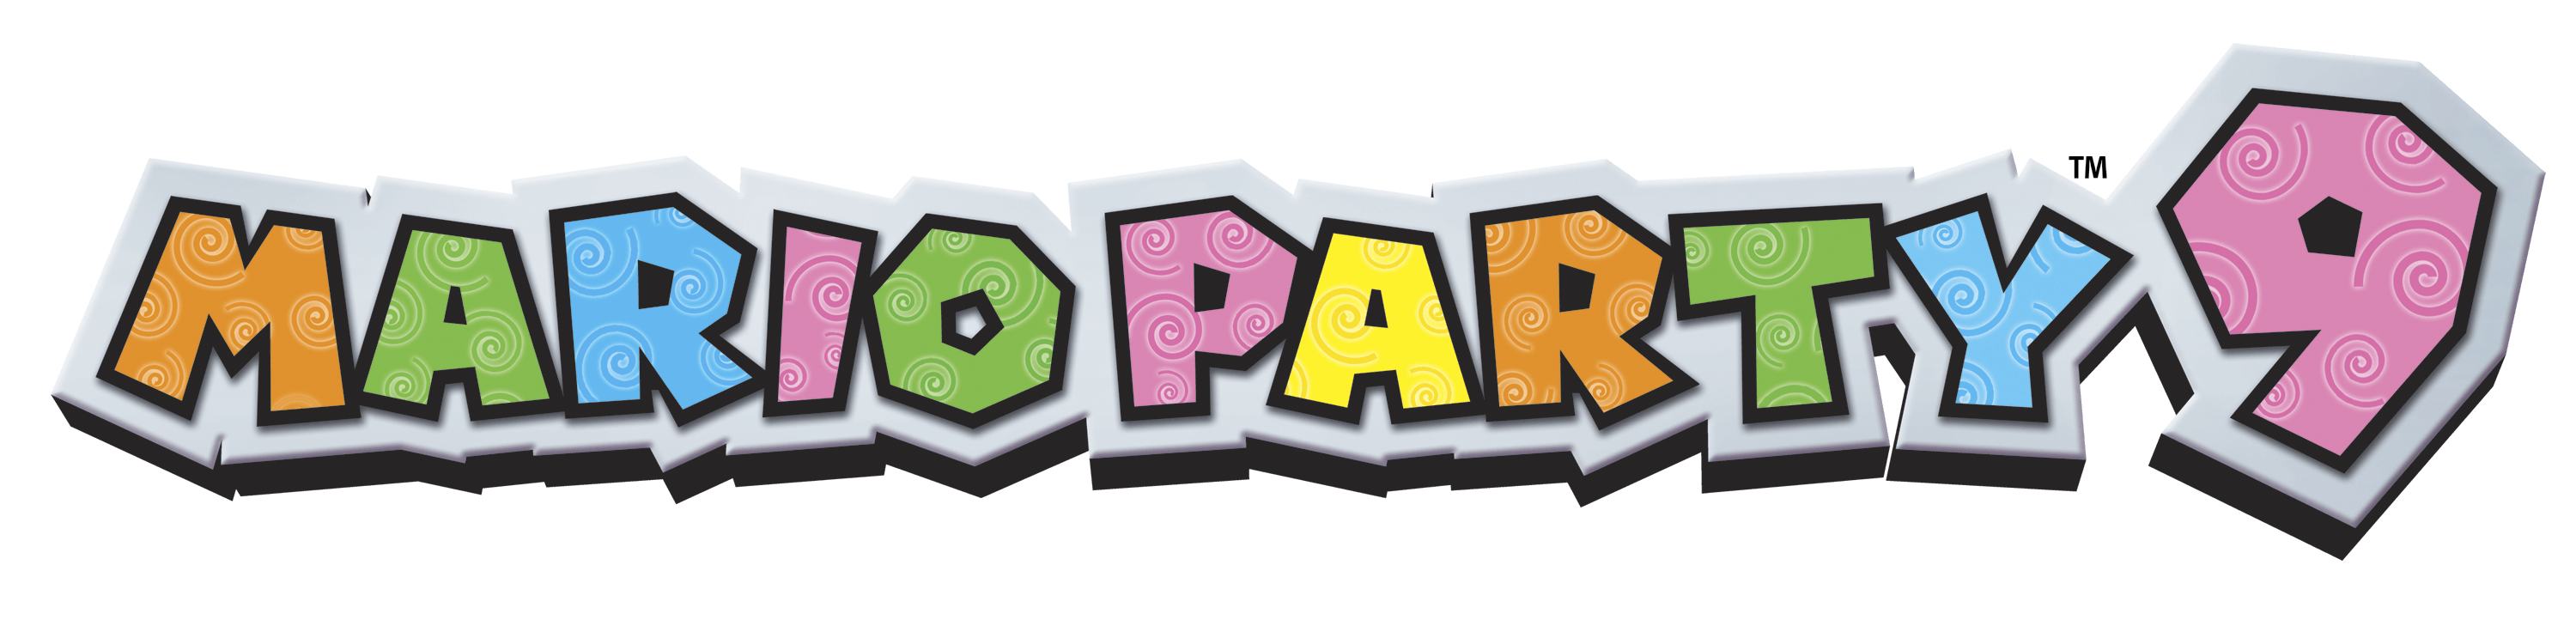 Mario Party 2 Logo - Logo Changes for Mario Party 9 - Mario Party Legacy